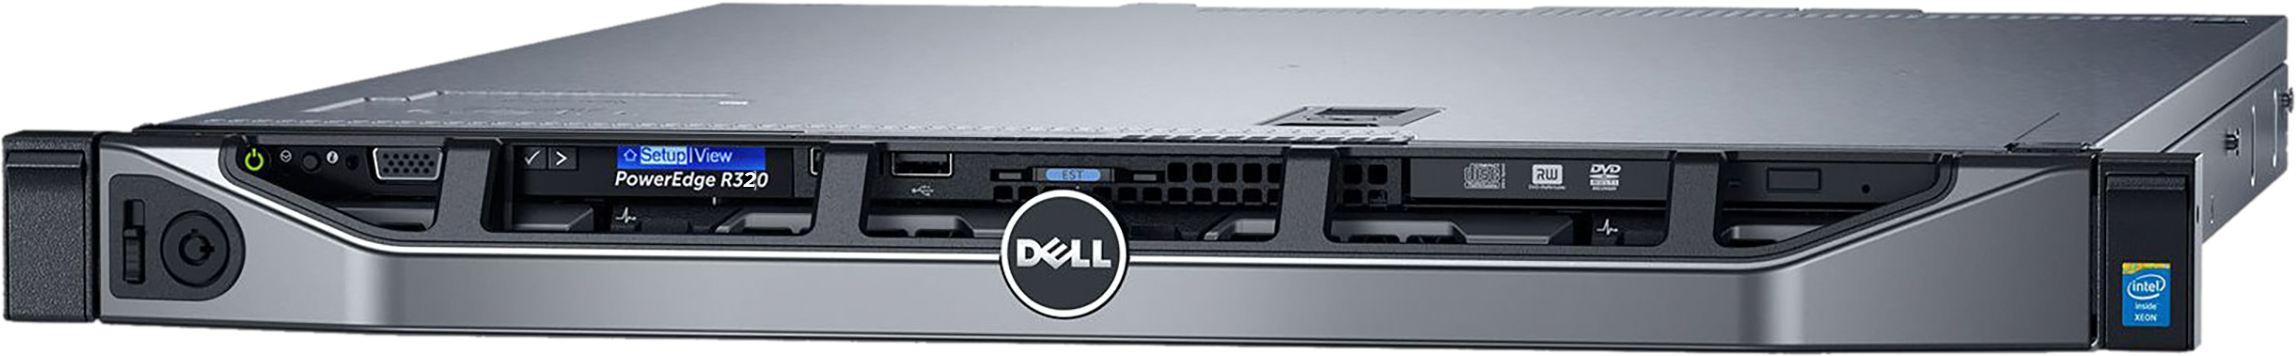 Аренда физического сервера DELL R320 / 1×E5-2420 v2 / 8 GB RAM / 4 × 4 TB HDD / H310